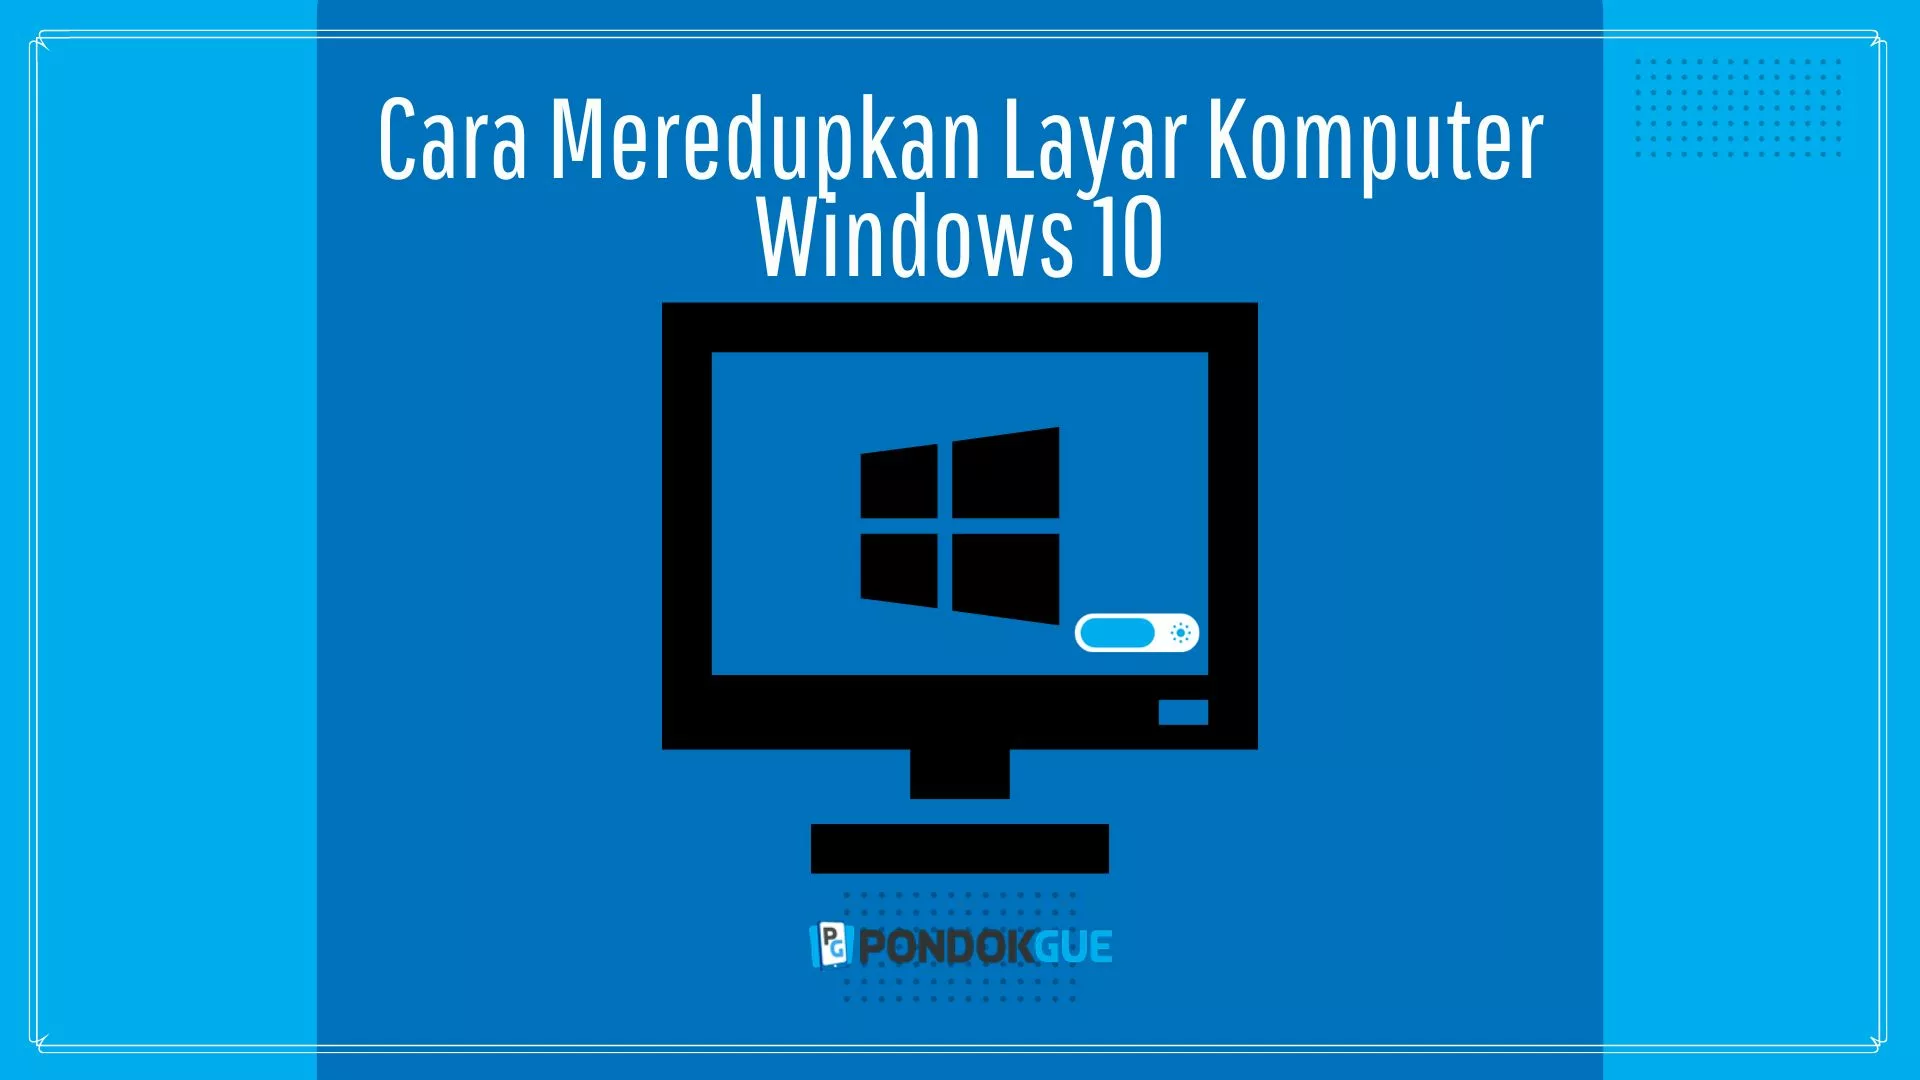 Cara meredupkan layar komputer Windows 10 - Pondokgue.com